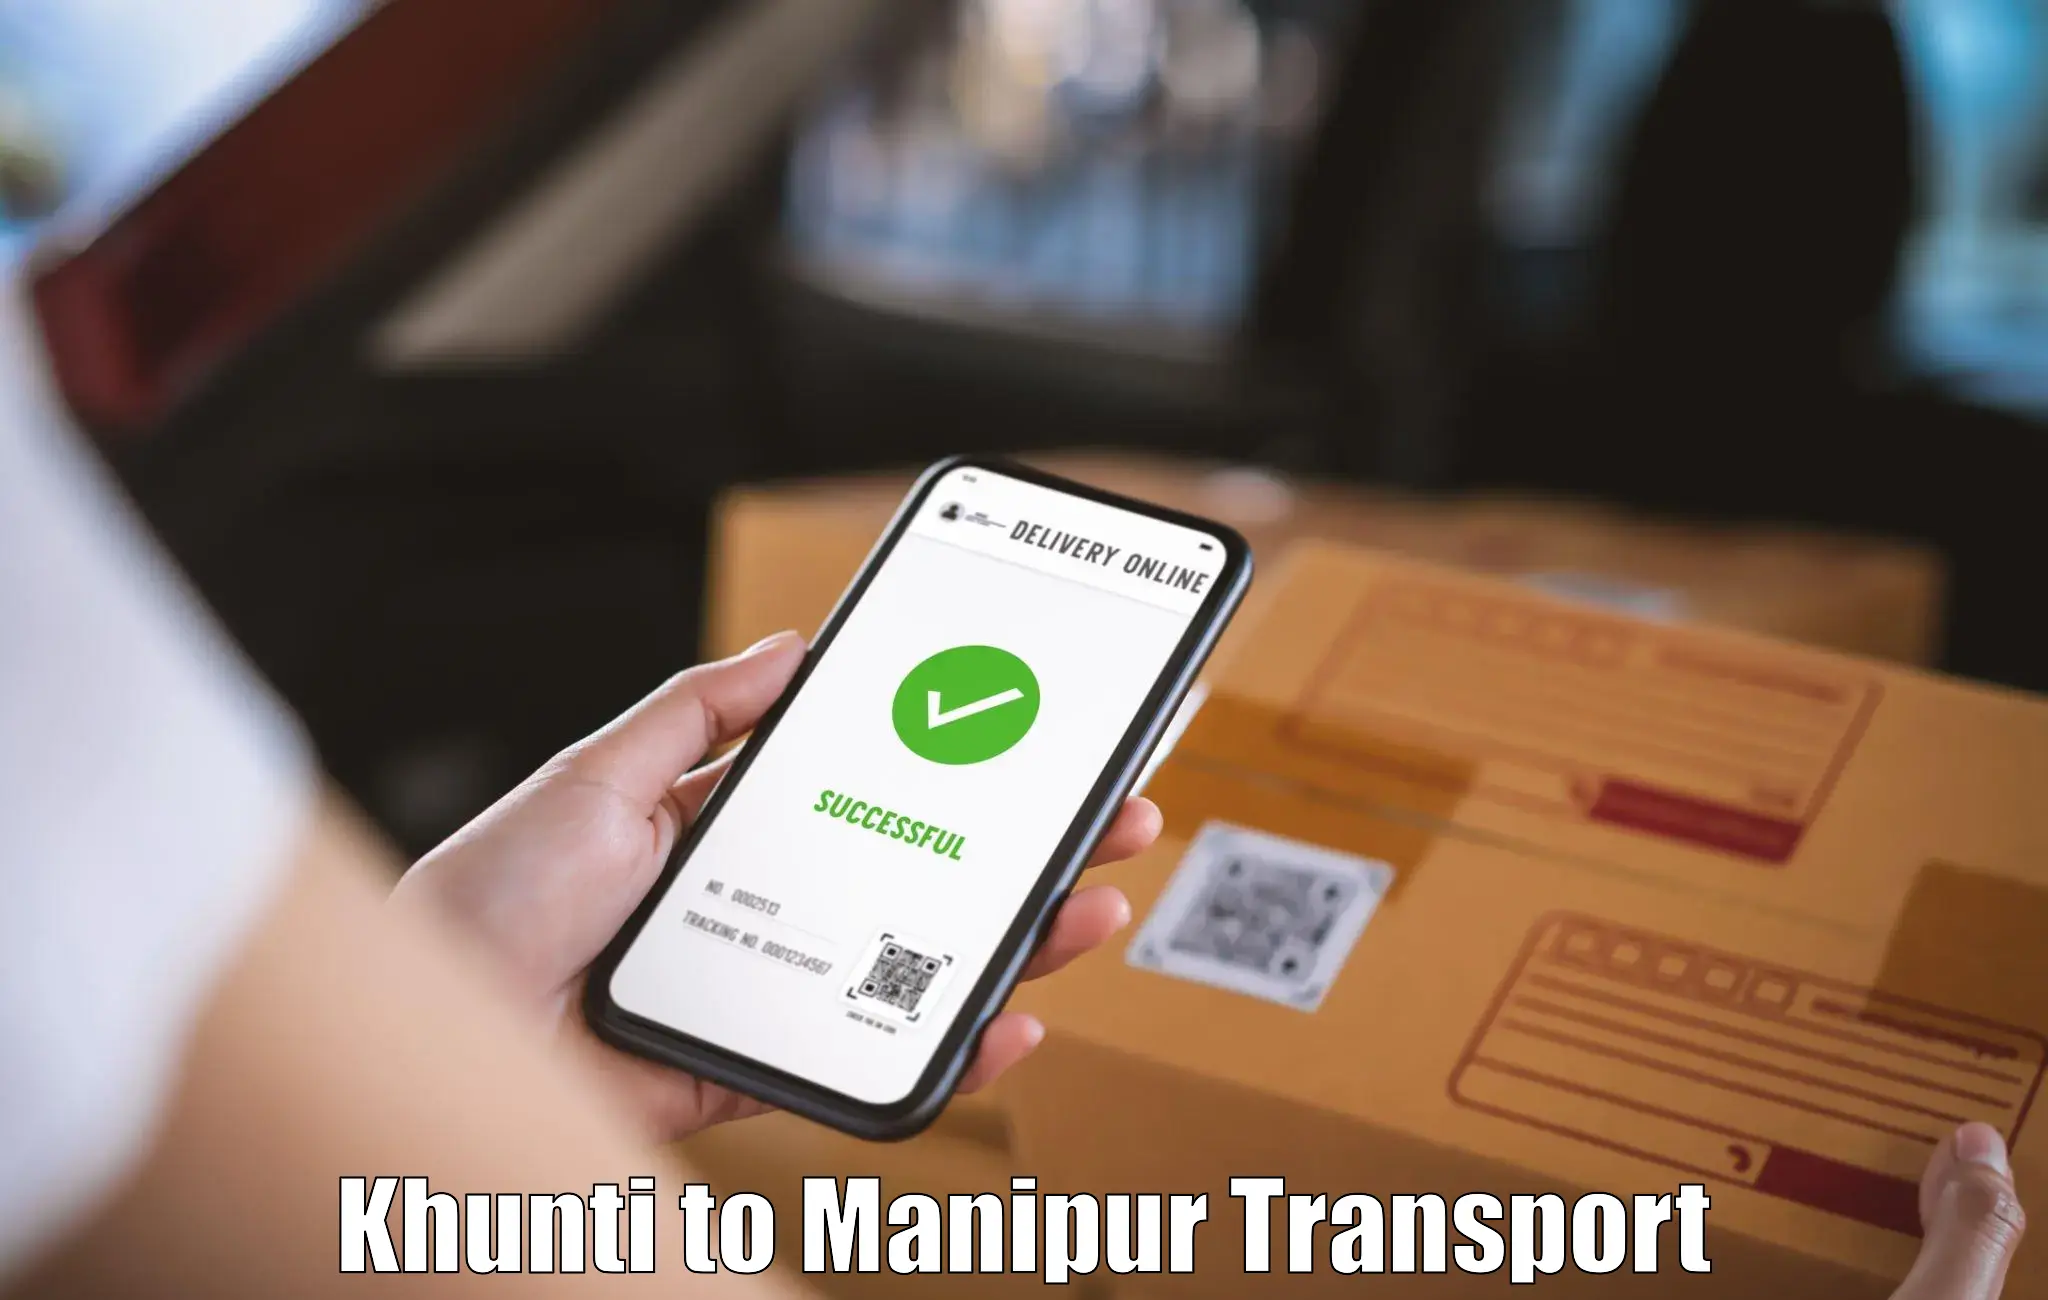 Daily transport service Khunti to Kanti